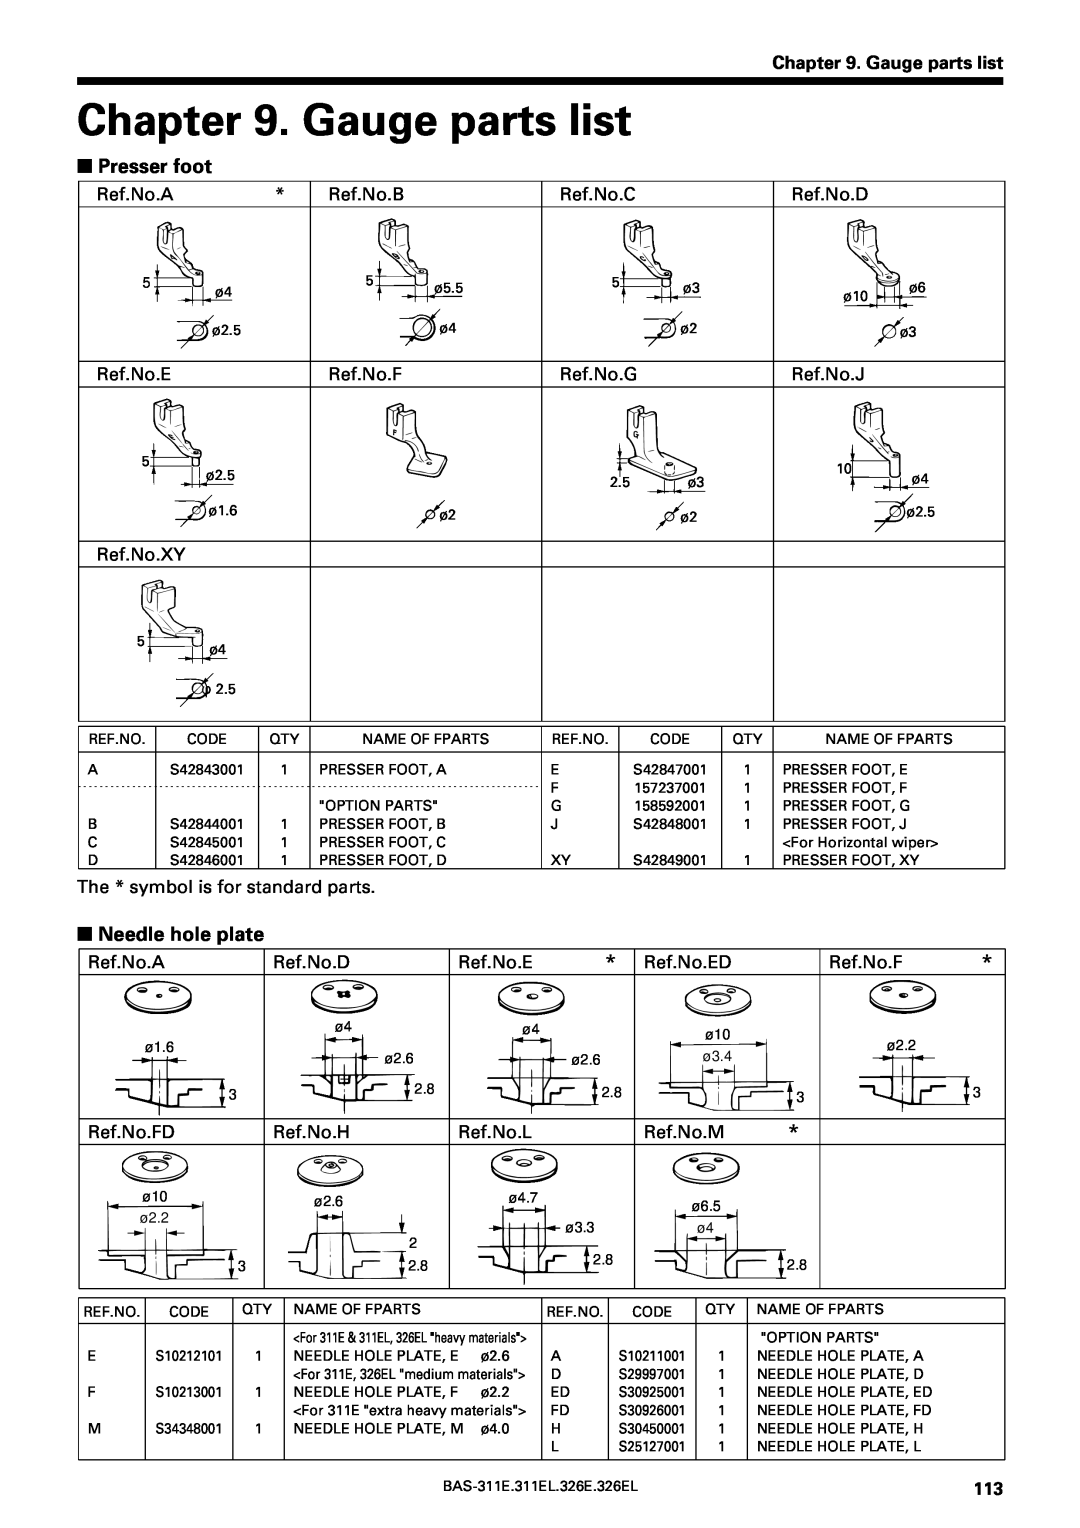 Brother BAS-311E service manual Gauge parts list, Presser foot, Needle hole plate 